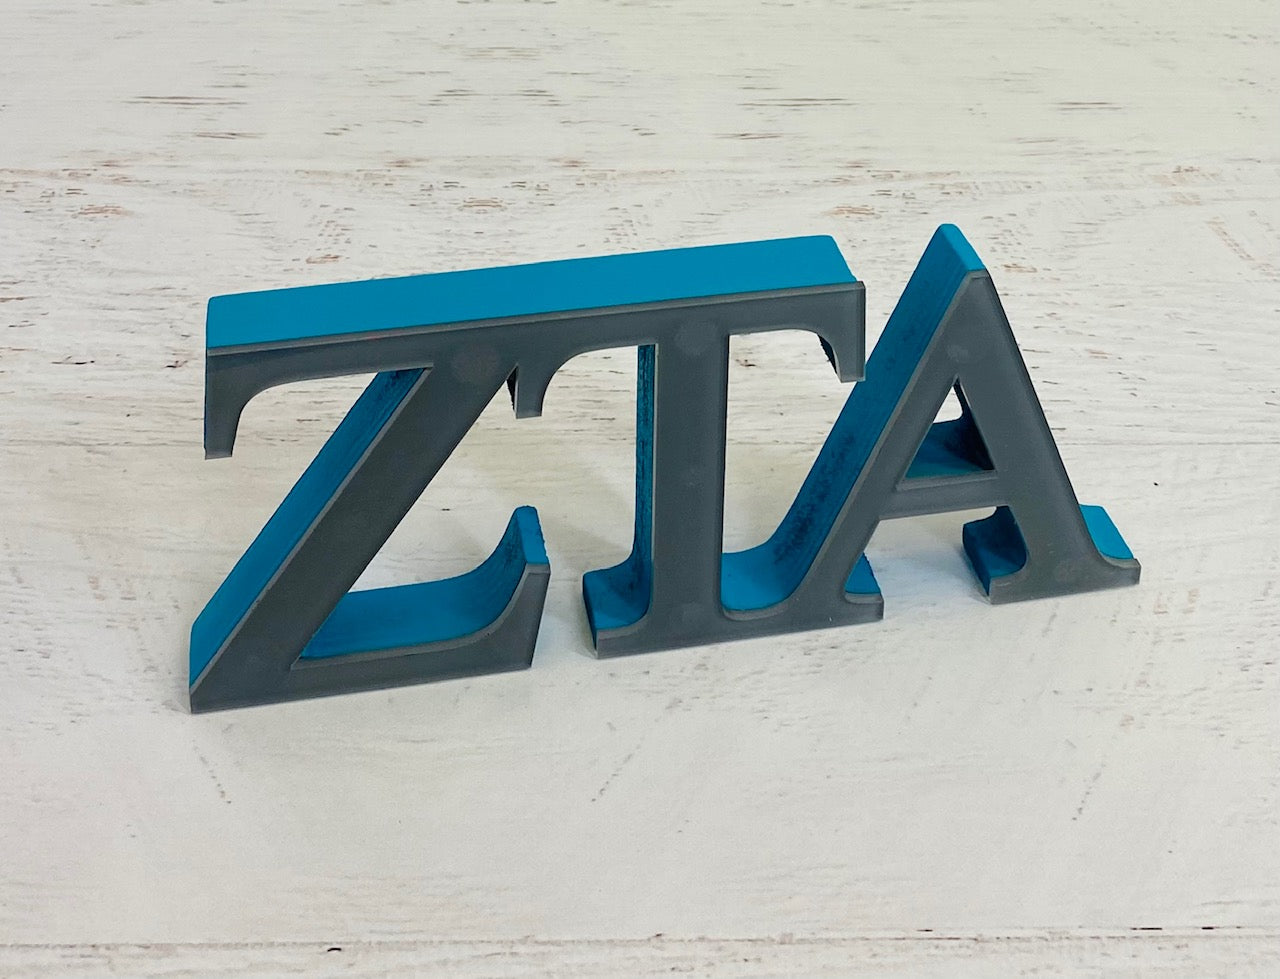 Zeta Tau Alpha - Stand-up Letters